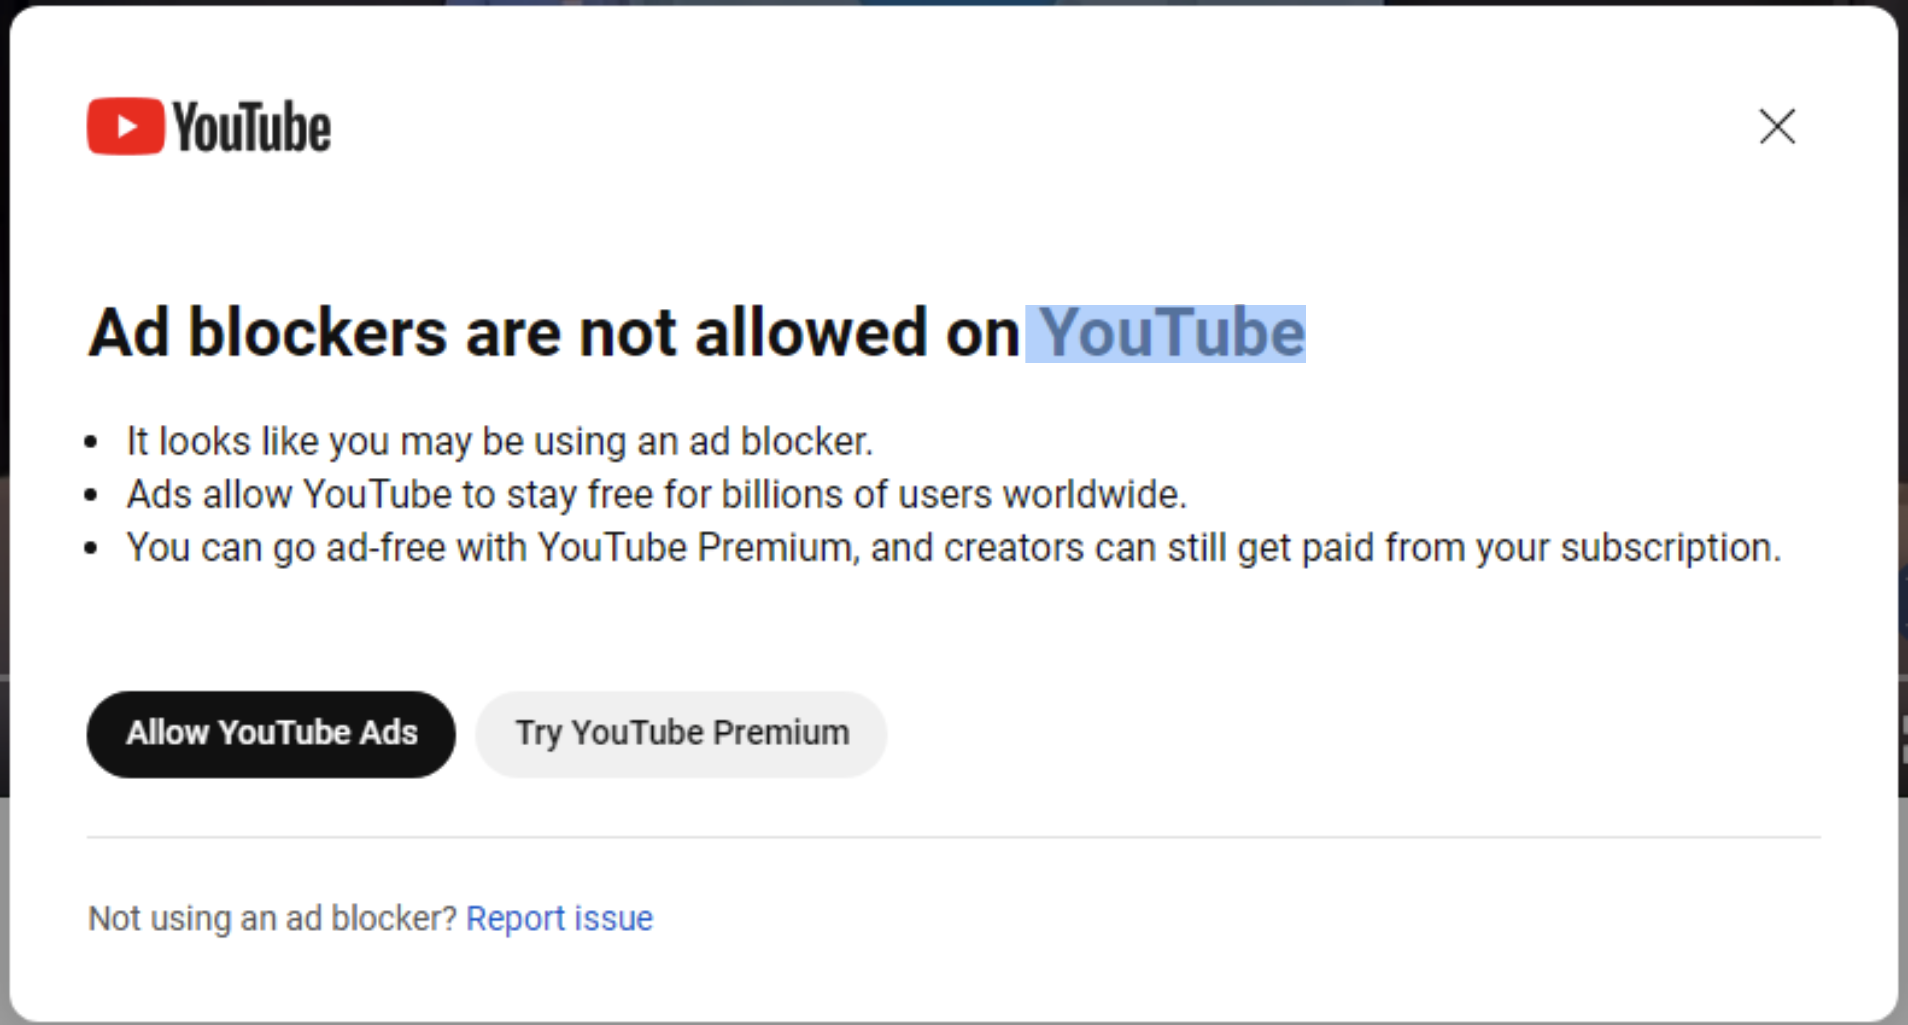 YouTube Tests Ad Blocker Ban